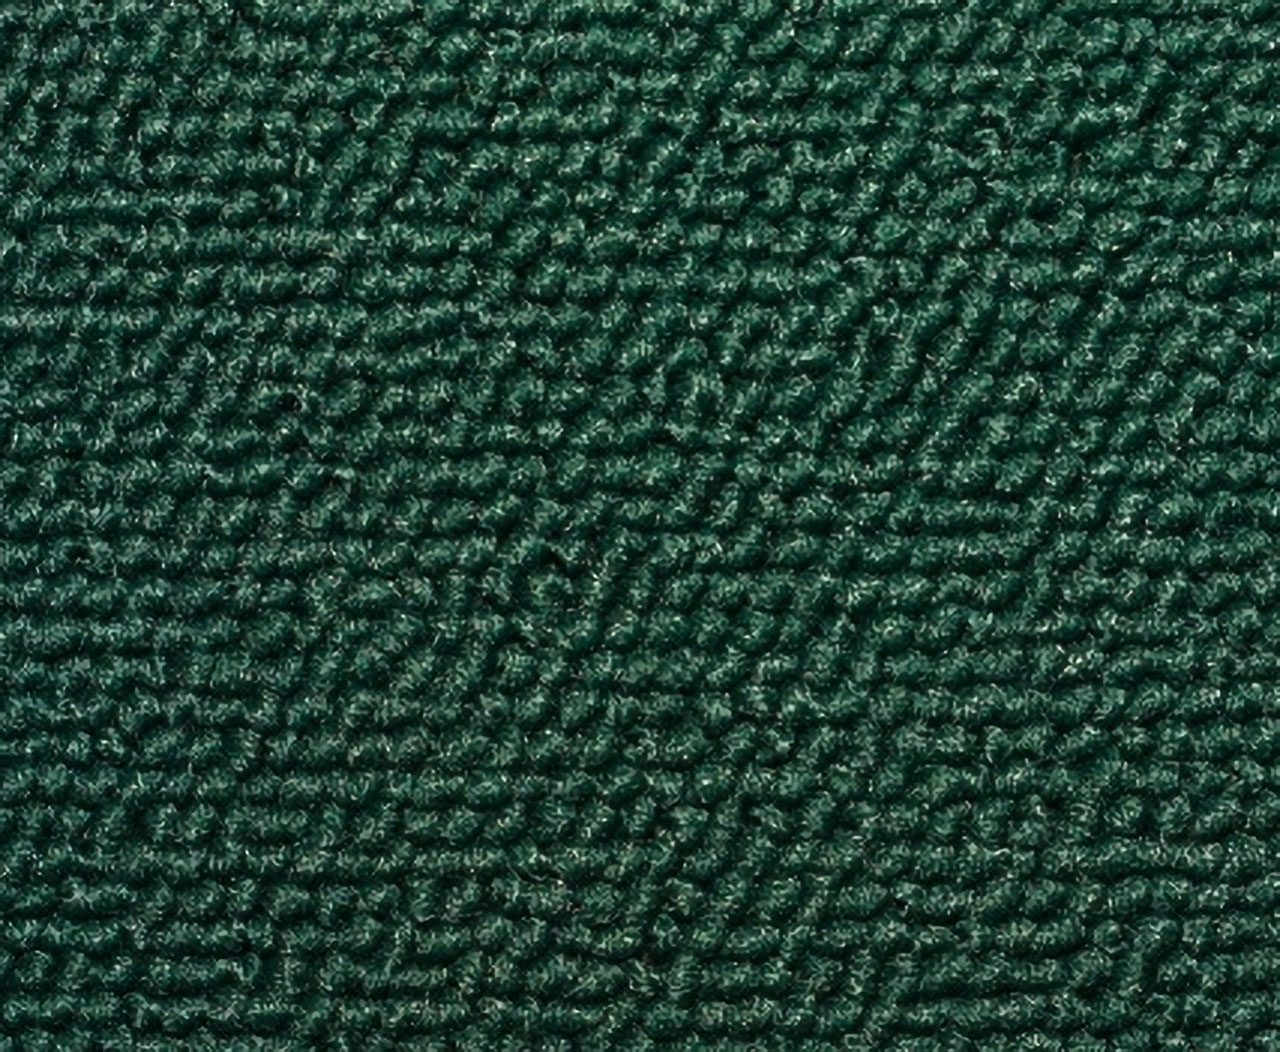 Holden Standard EJ Standard Panel Van B63 Curio Green Carpet (Image 1 of 1)